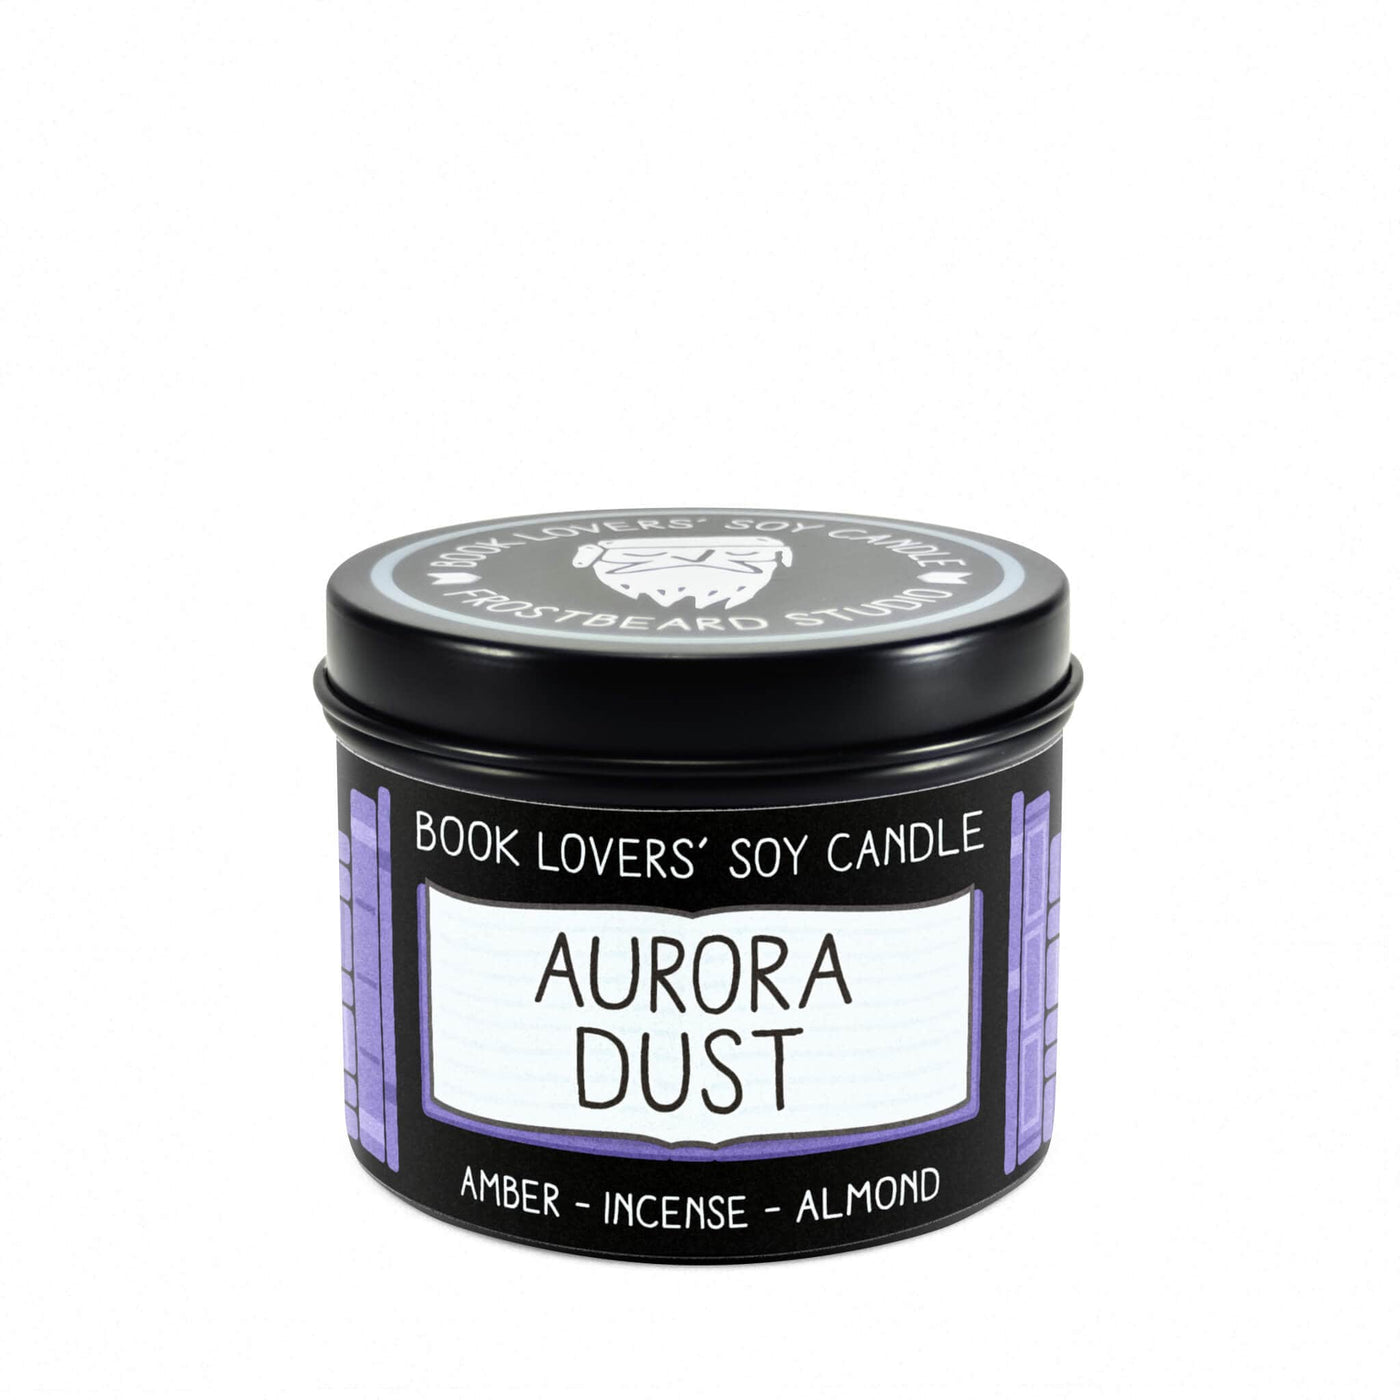 Aurora Dust - 4 oz Jar - Book Lovers' Soy Candle - Frostbeard Studio